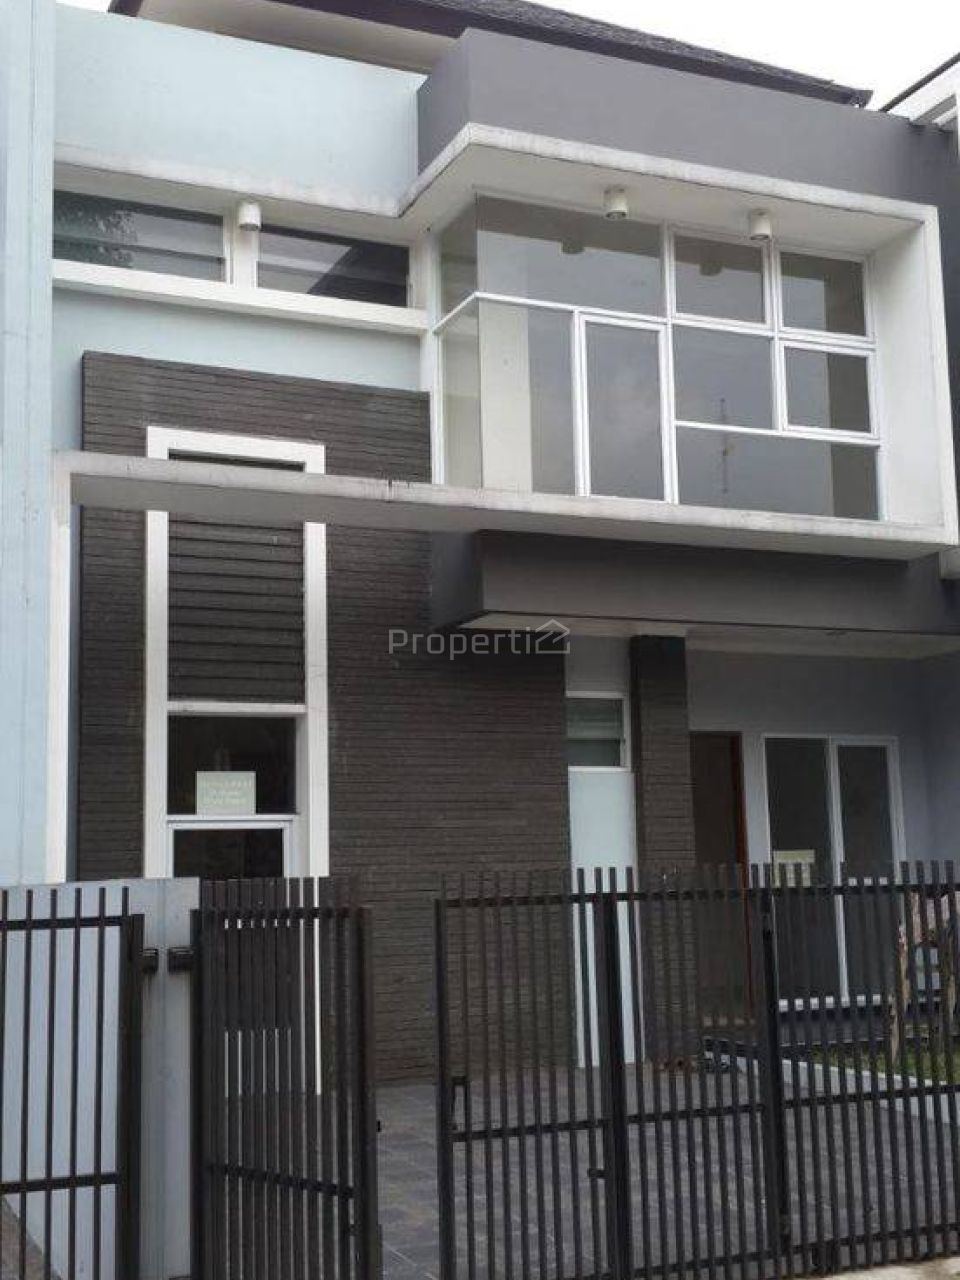 Rumah 2 Lantai di Setrasari, Kota Bandung, Jawa Barat